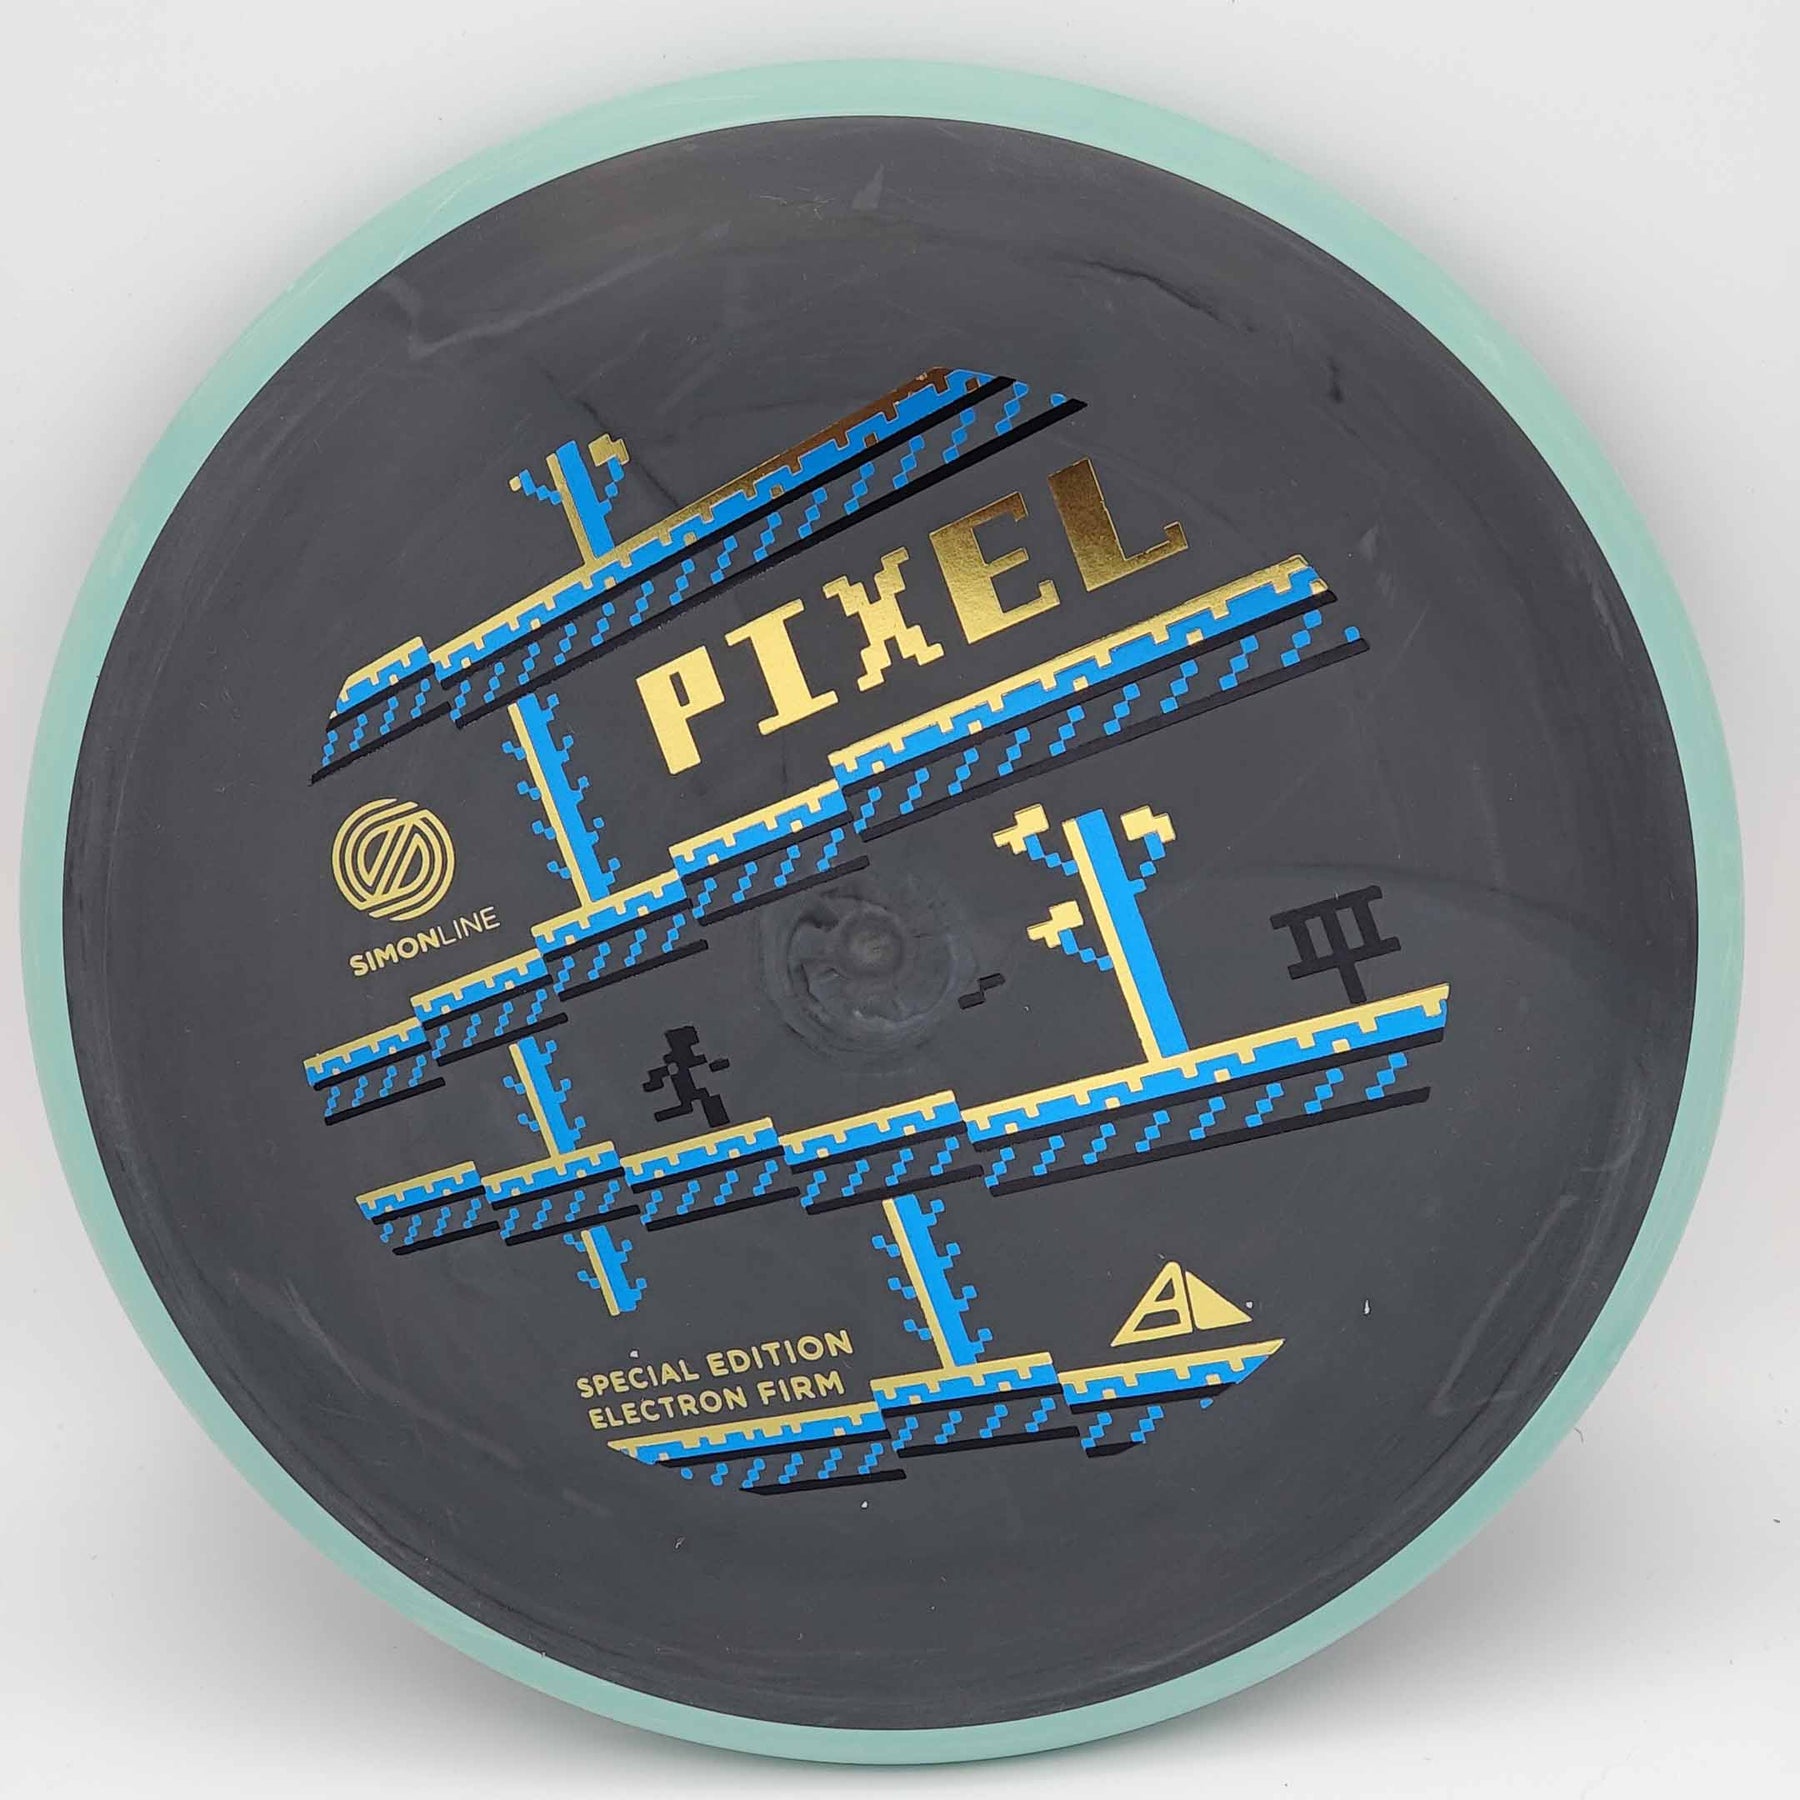 Axiom Pixel Simon Line - Special Edition Electron Firm